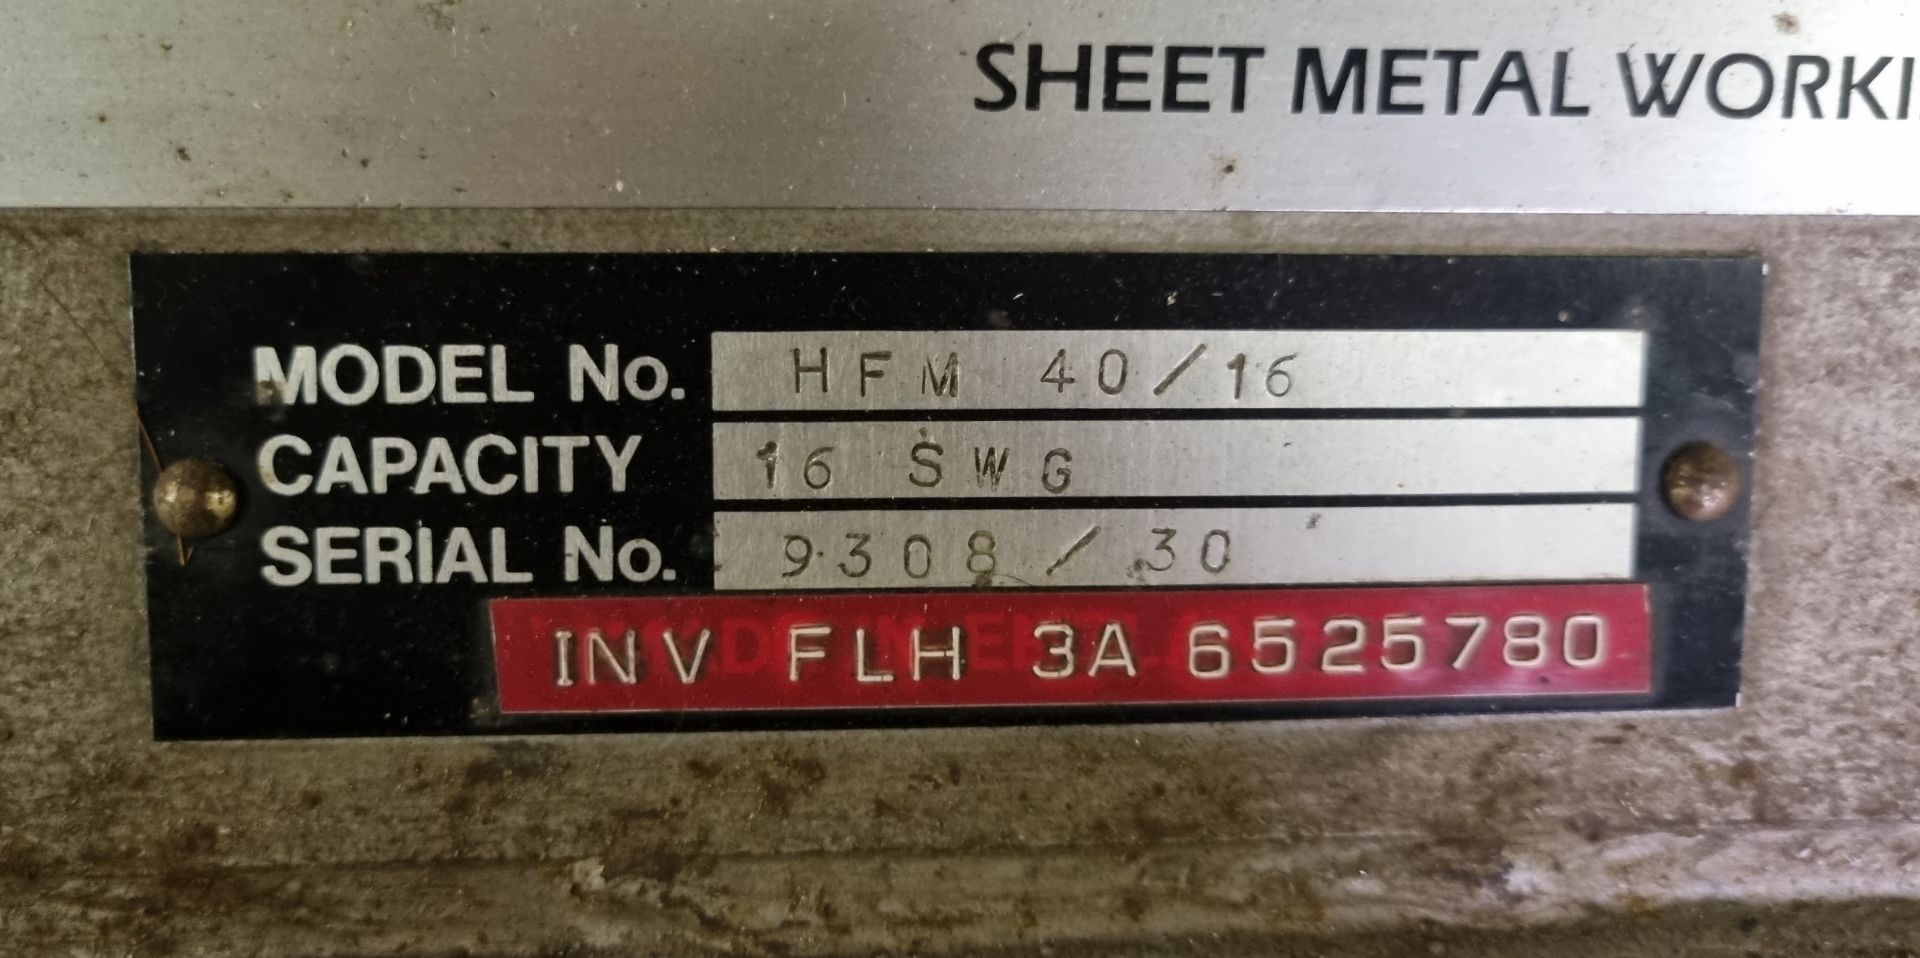 Waltons HFM 40/16 sheet metal folding machine - Serial No: 9308 / 30 - capacity: 16 SWG - Bild 4 aus 7